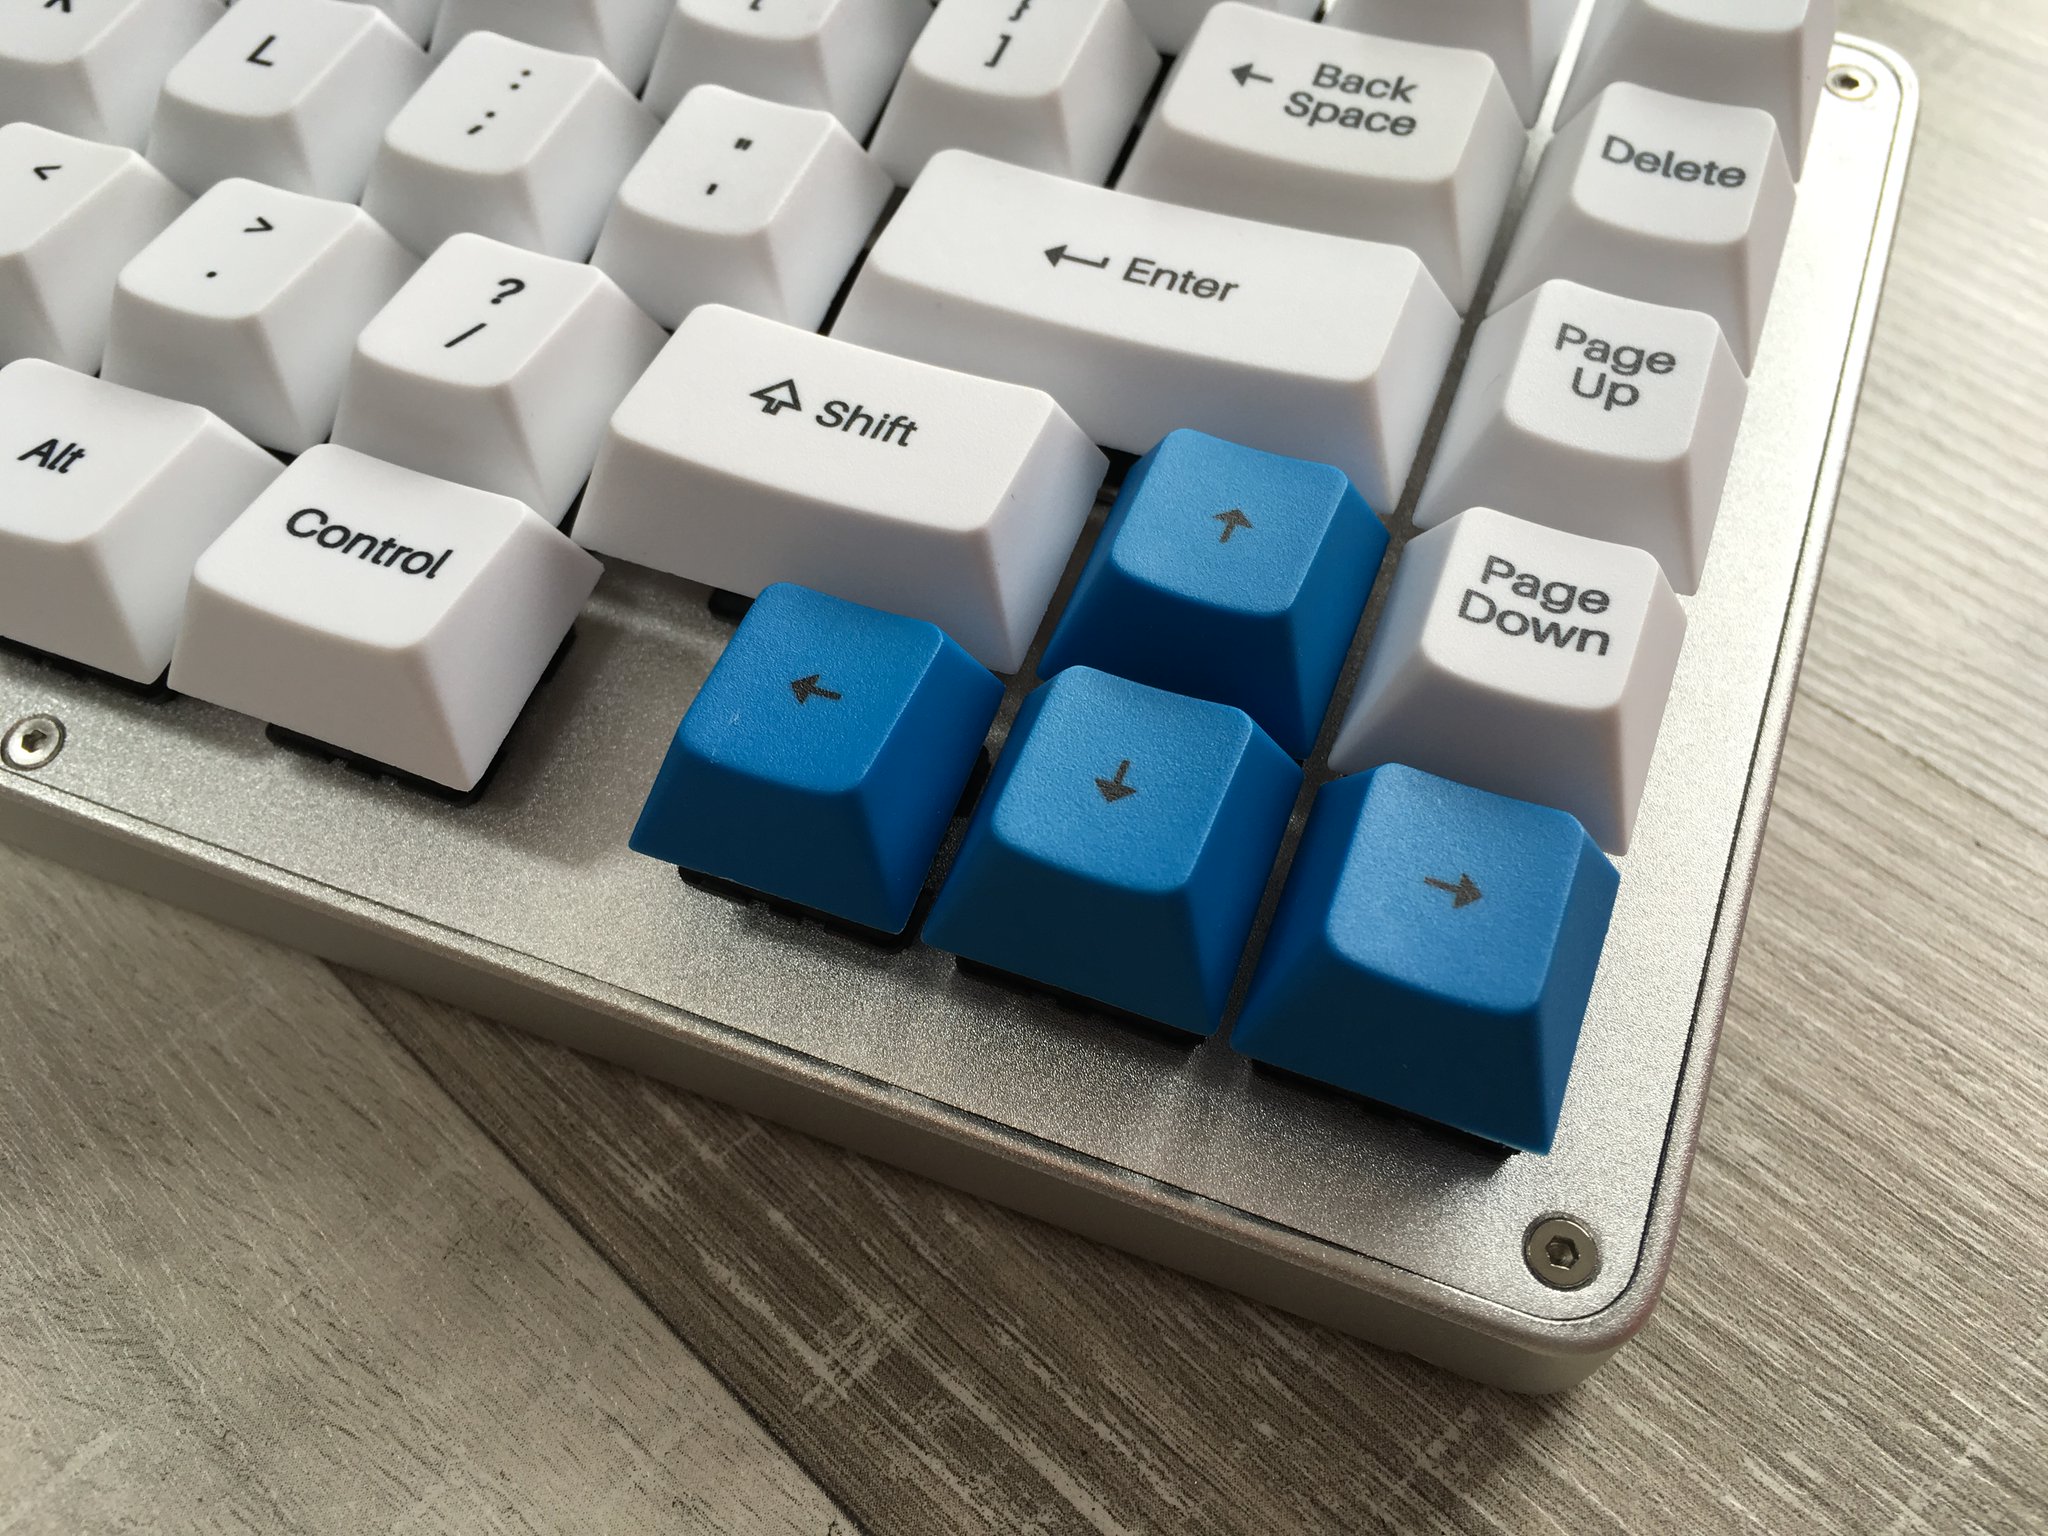 Whitefox keyboard, keys